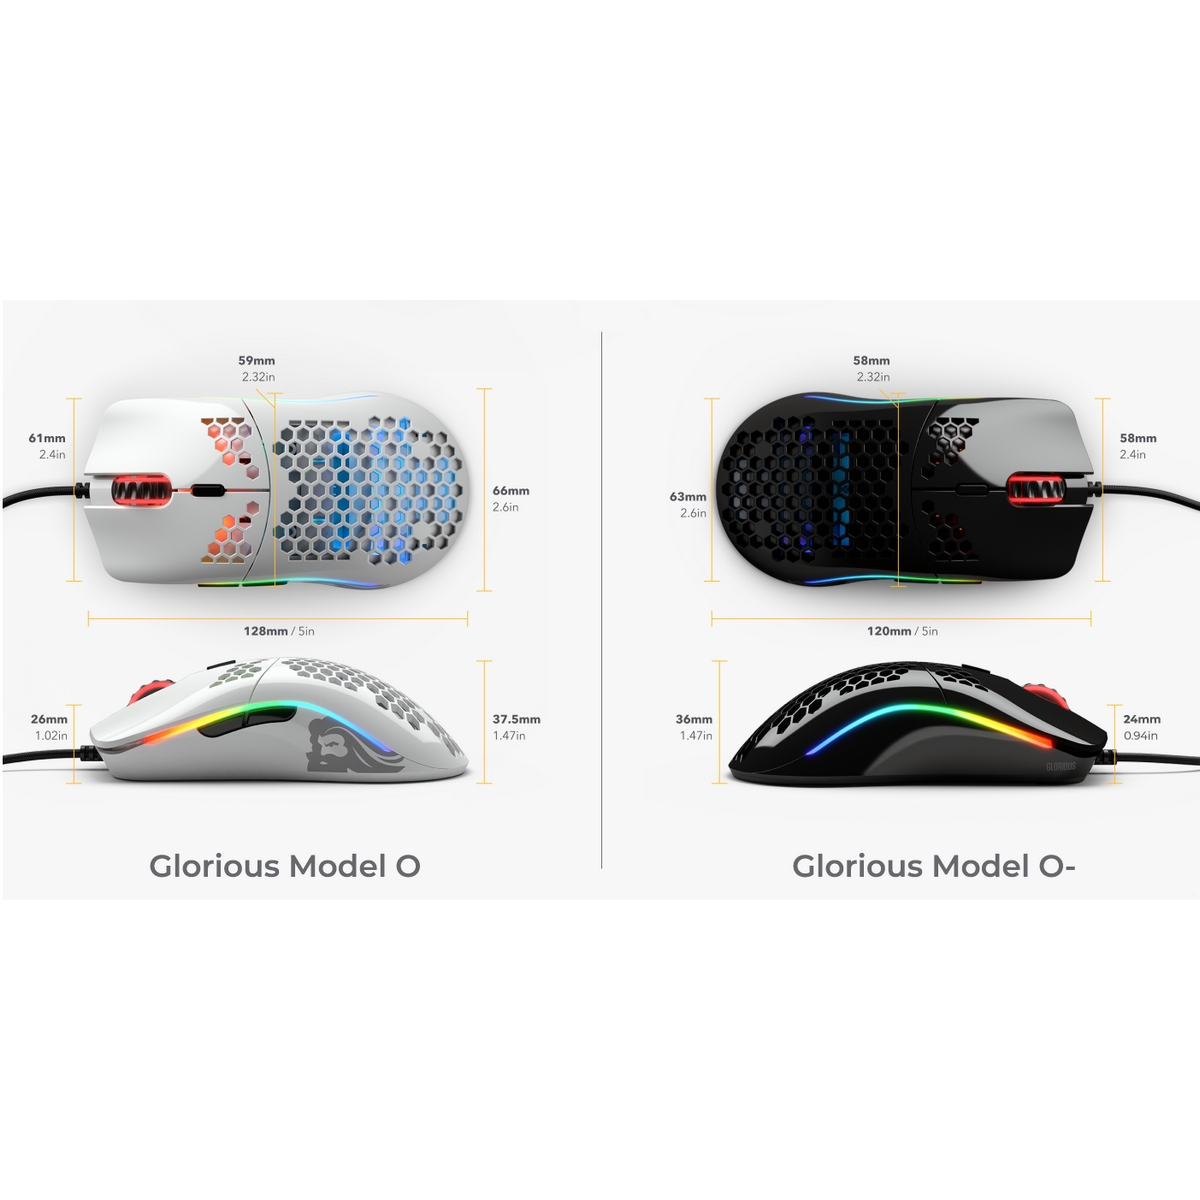 Glorious - Glorious Model O- USB RGB Odin Optical Gaming Mouse - Glossy Black (GOM-GBLACK)